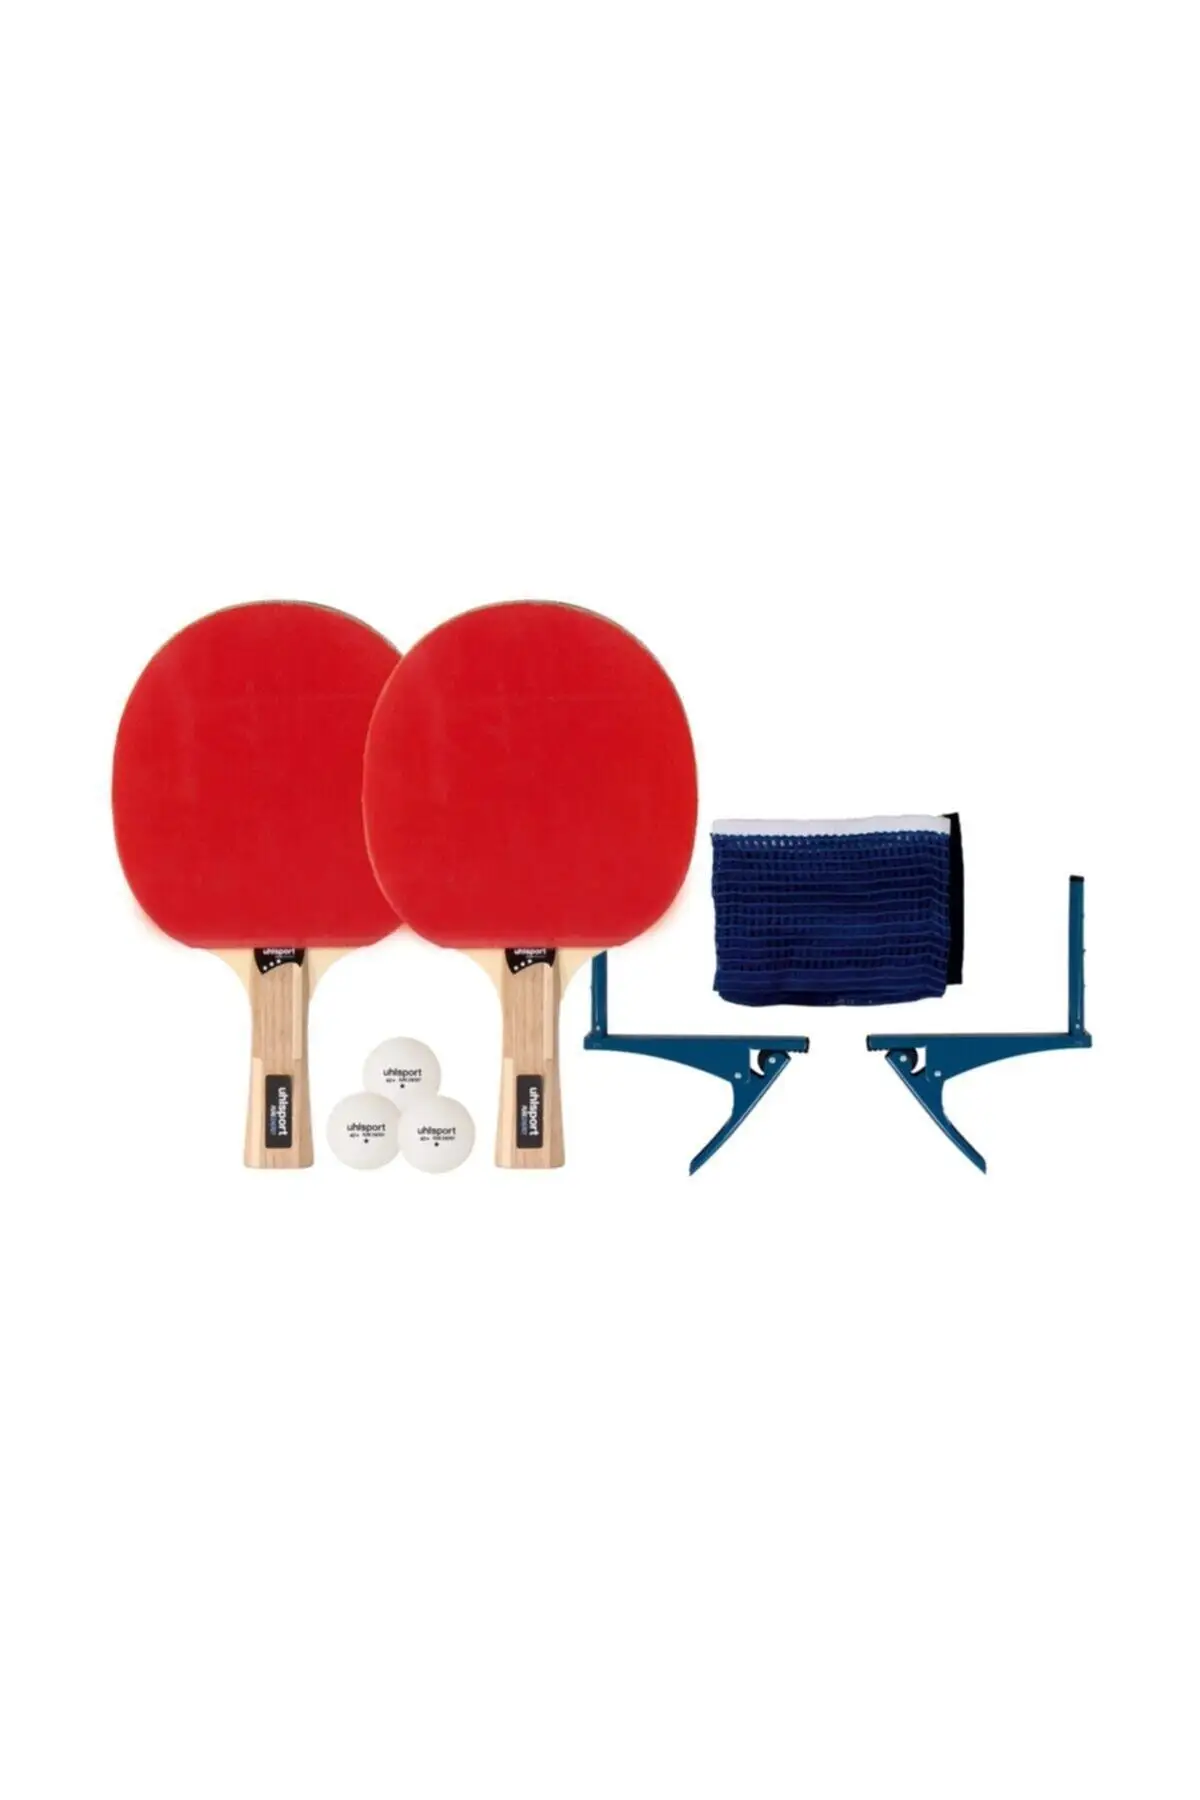 Uhlsport Table Tennis Racket Set Tts-1010 - Seti Tennis Equipment & Accessory Outdoor